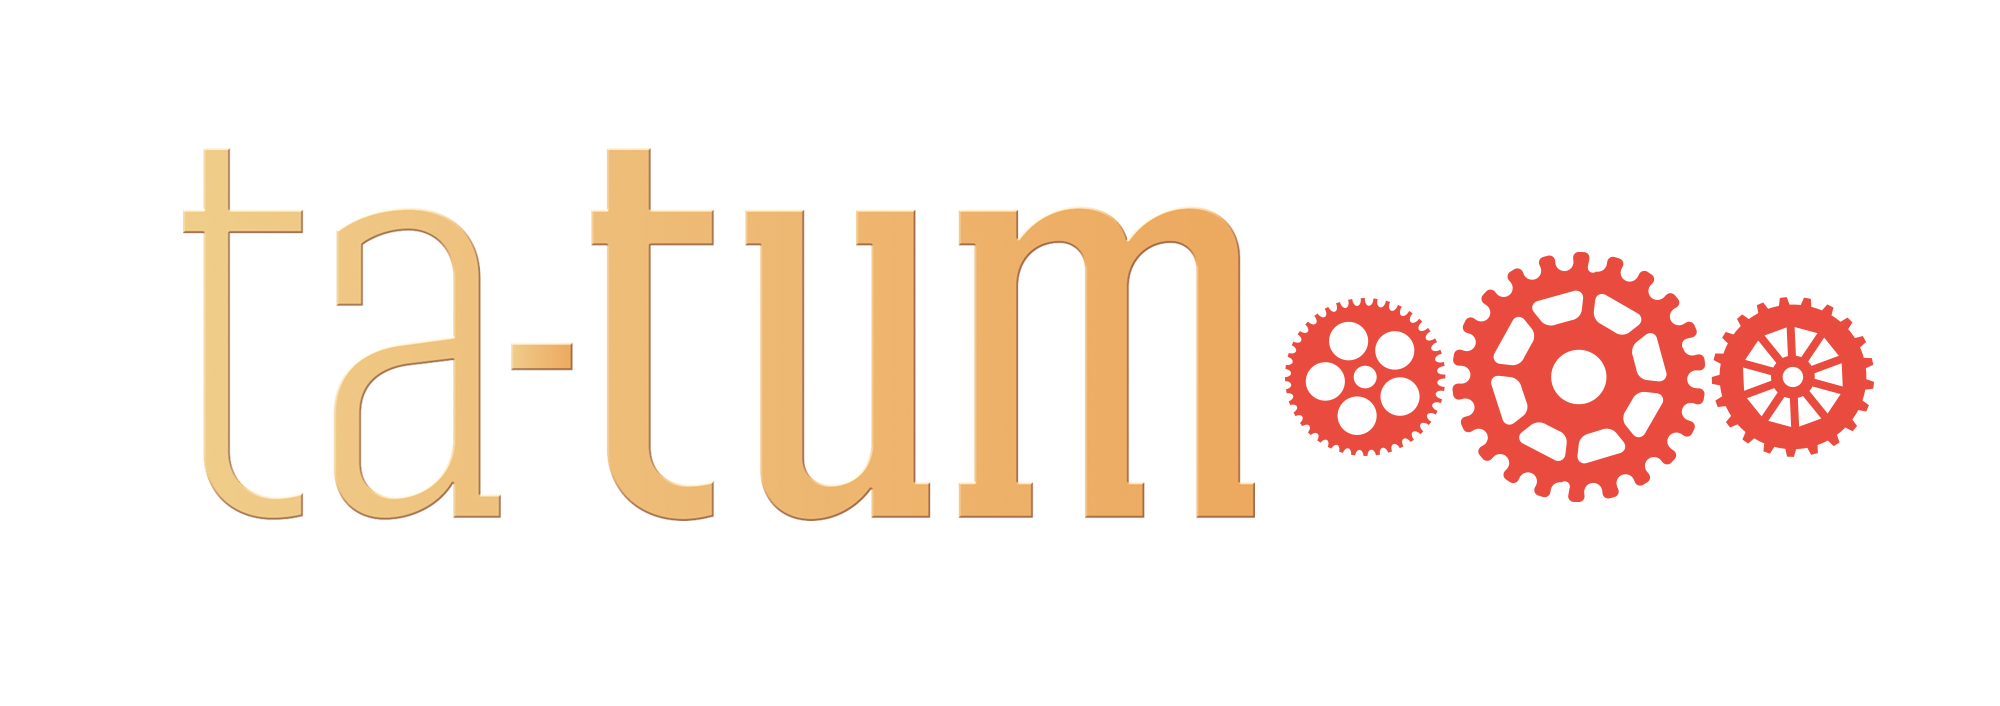 Resultado de imagen de ta-tum edelvives logo